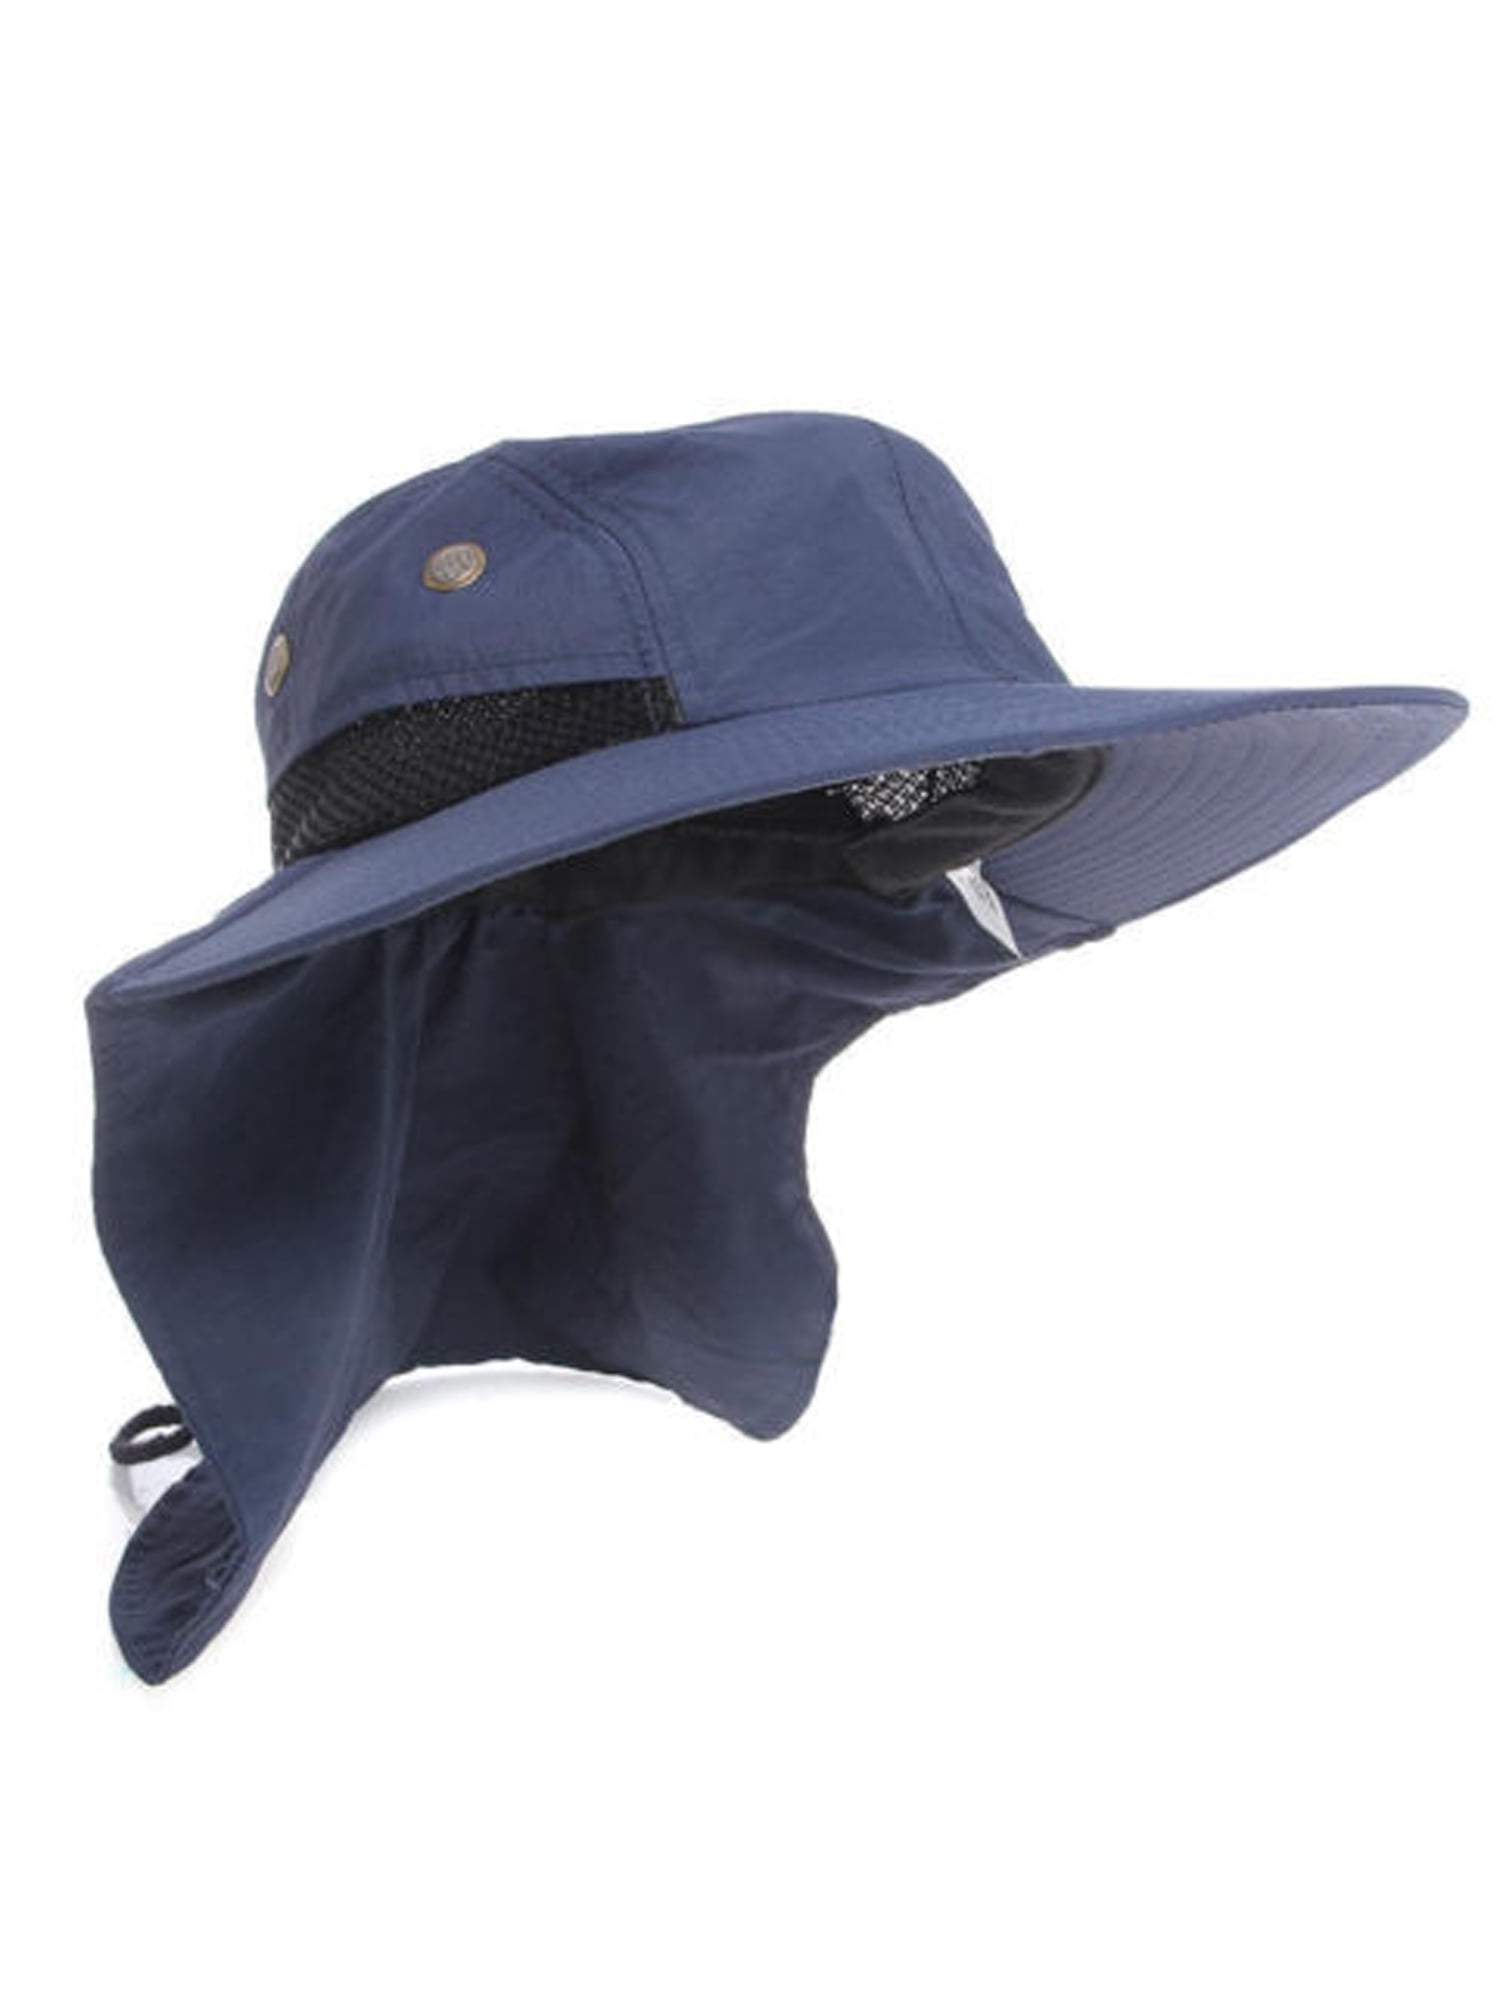 MIMI KING Children Visor Cap Swim Hat UV Sun Protection Kids Flap Cap Beach Hat for Outdoor Beach Camping Hiking Travel 2 Pack